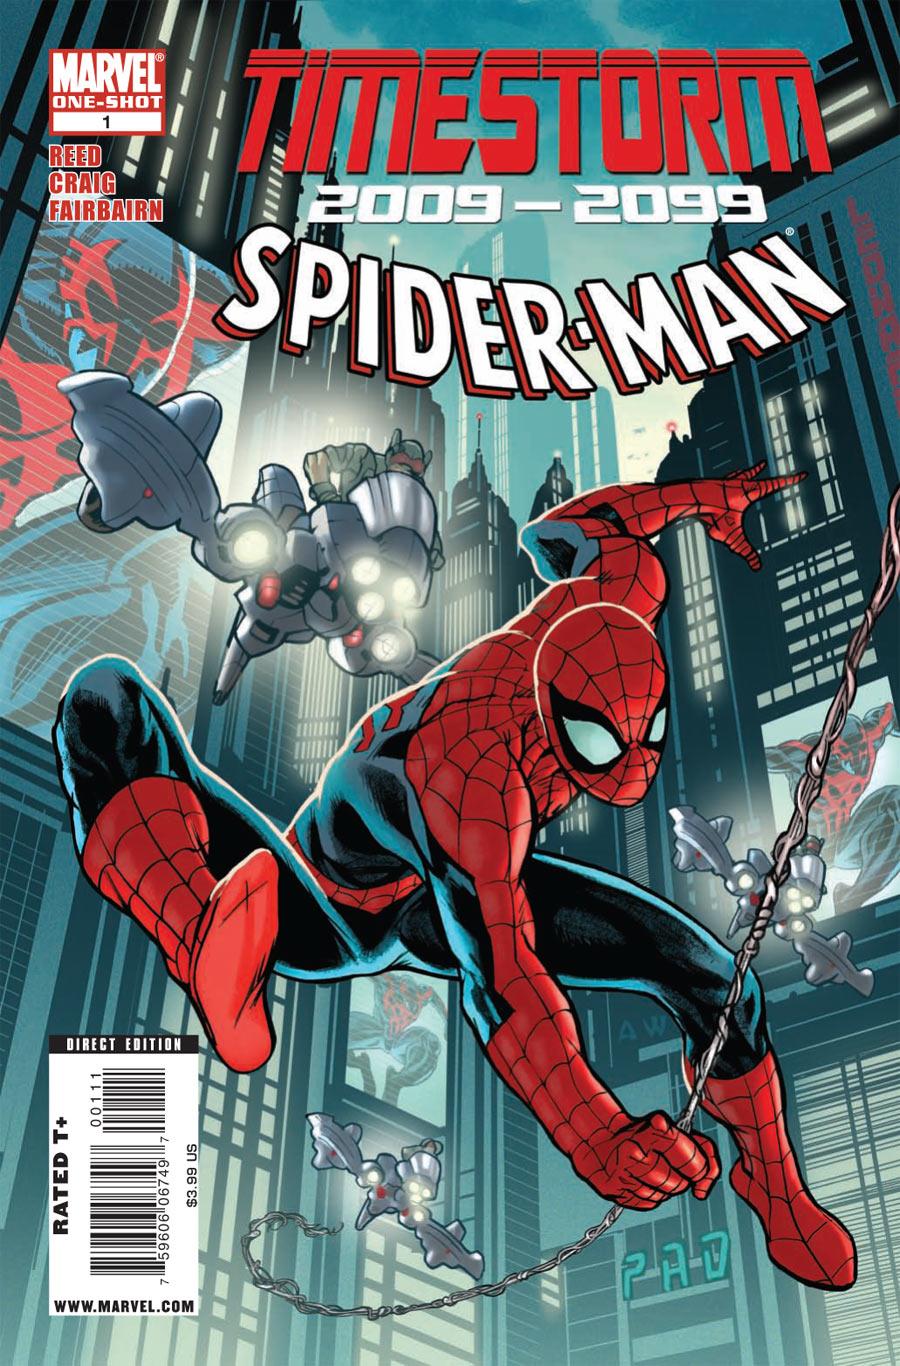 Timestorm 2009-2099: Spider-Man Vol. 1 #1